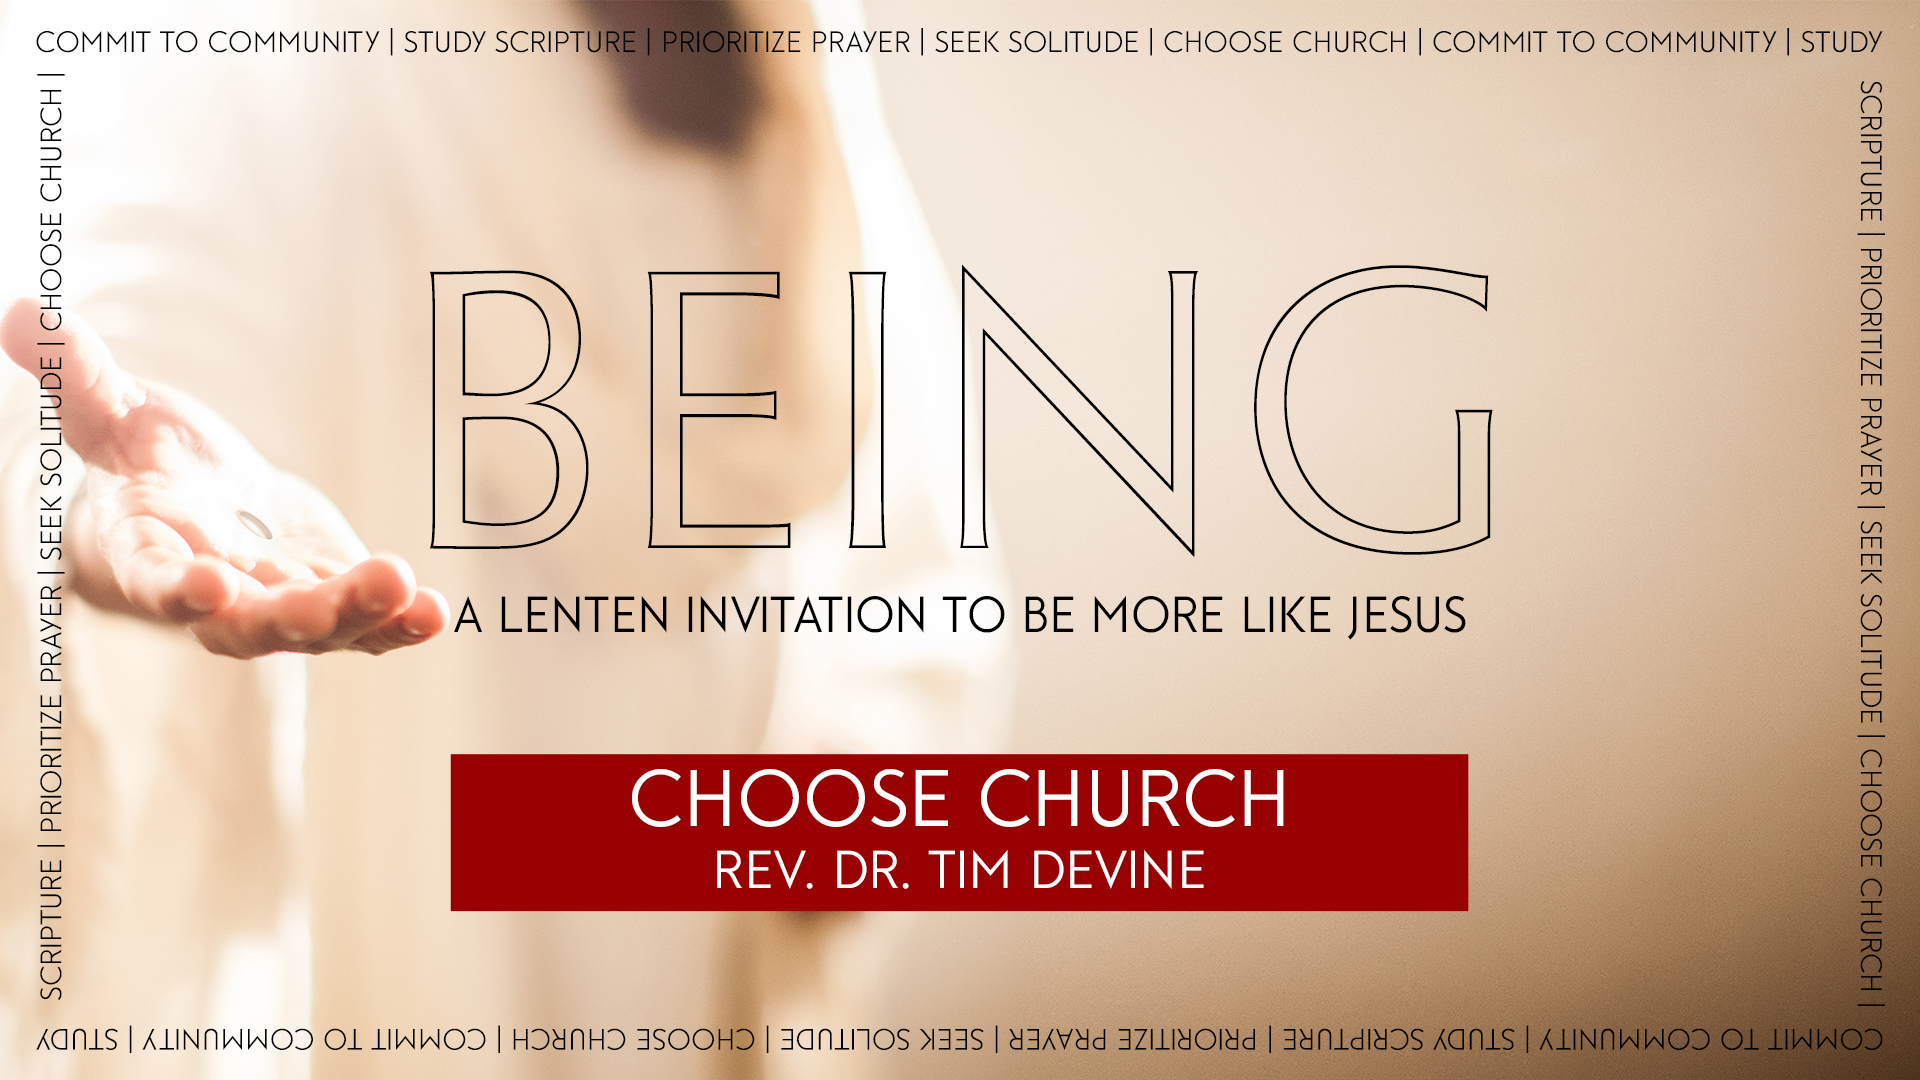 Choose Church Image